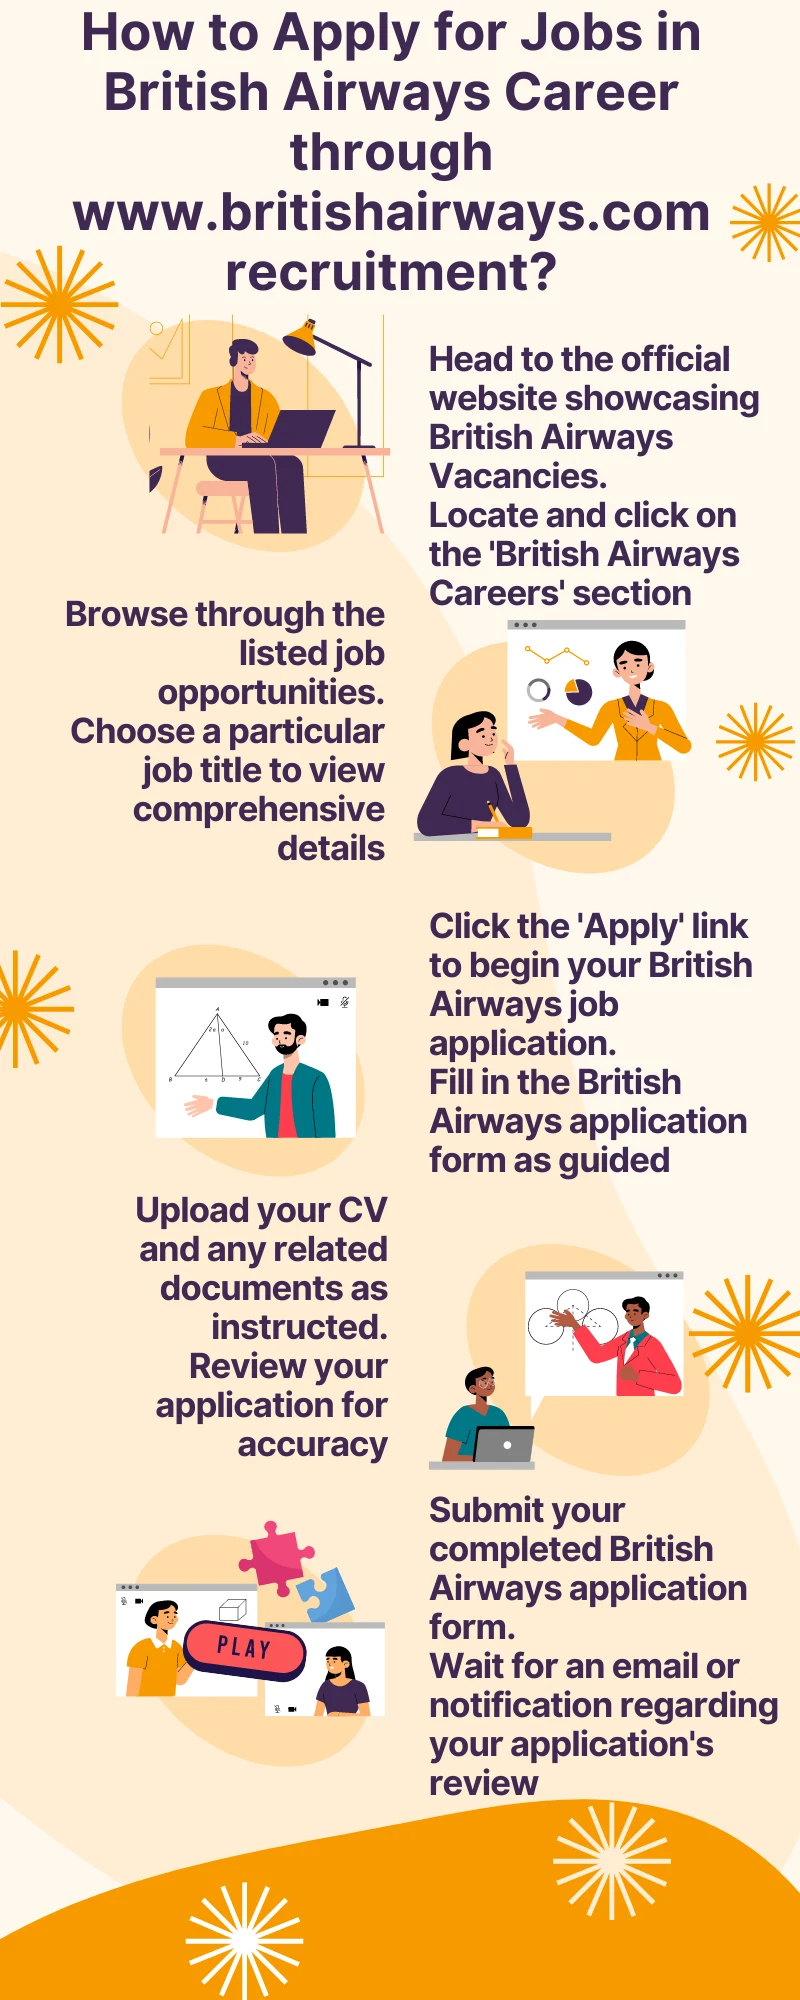 How to Apply for Jobs in British Airways Career through www.britishairways.com recruitment?